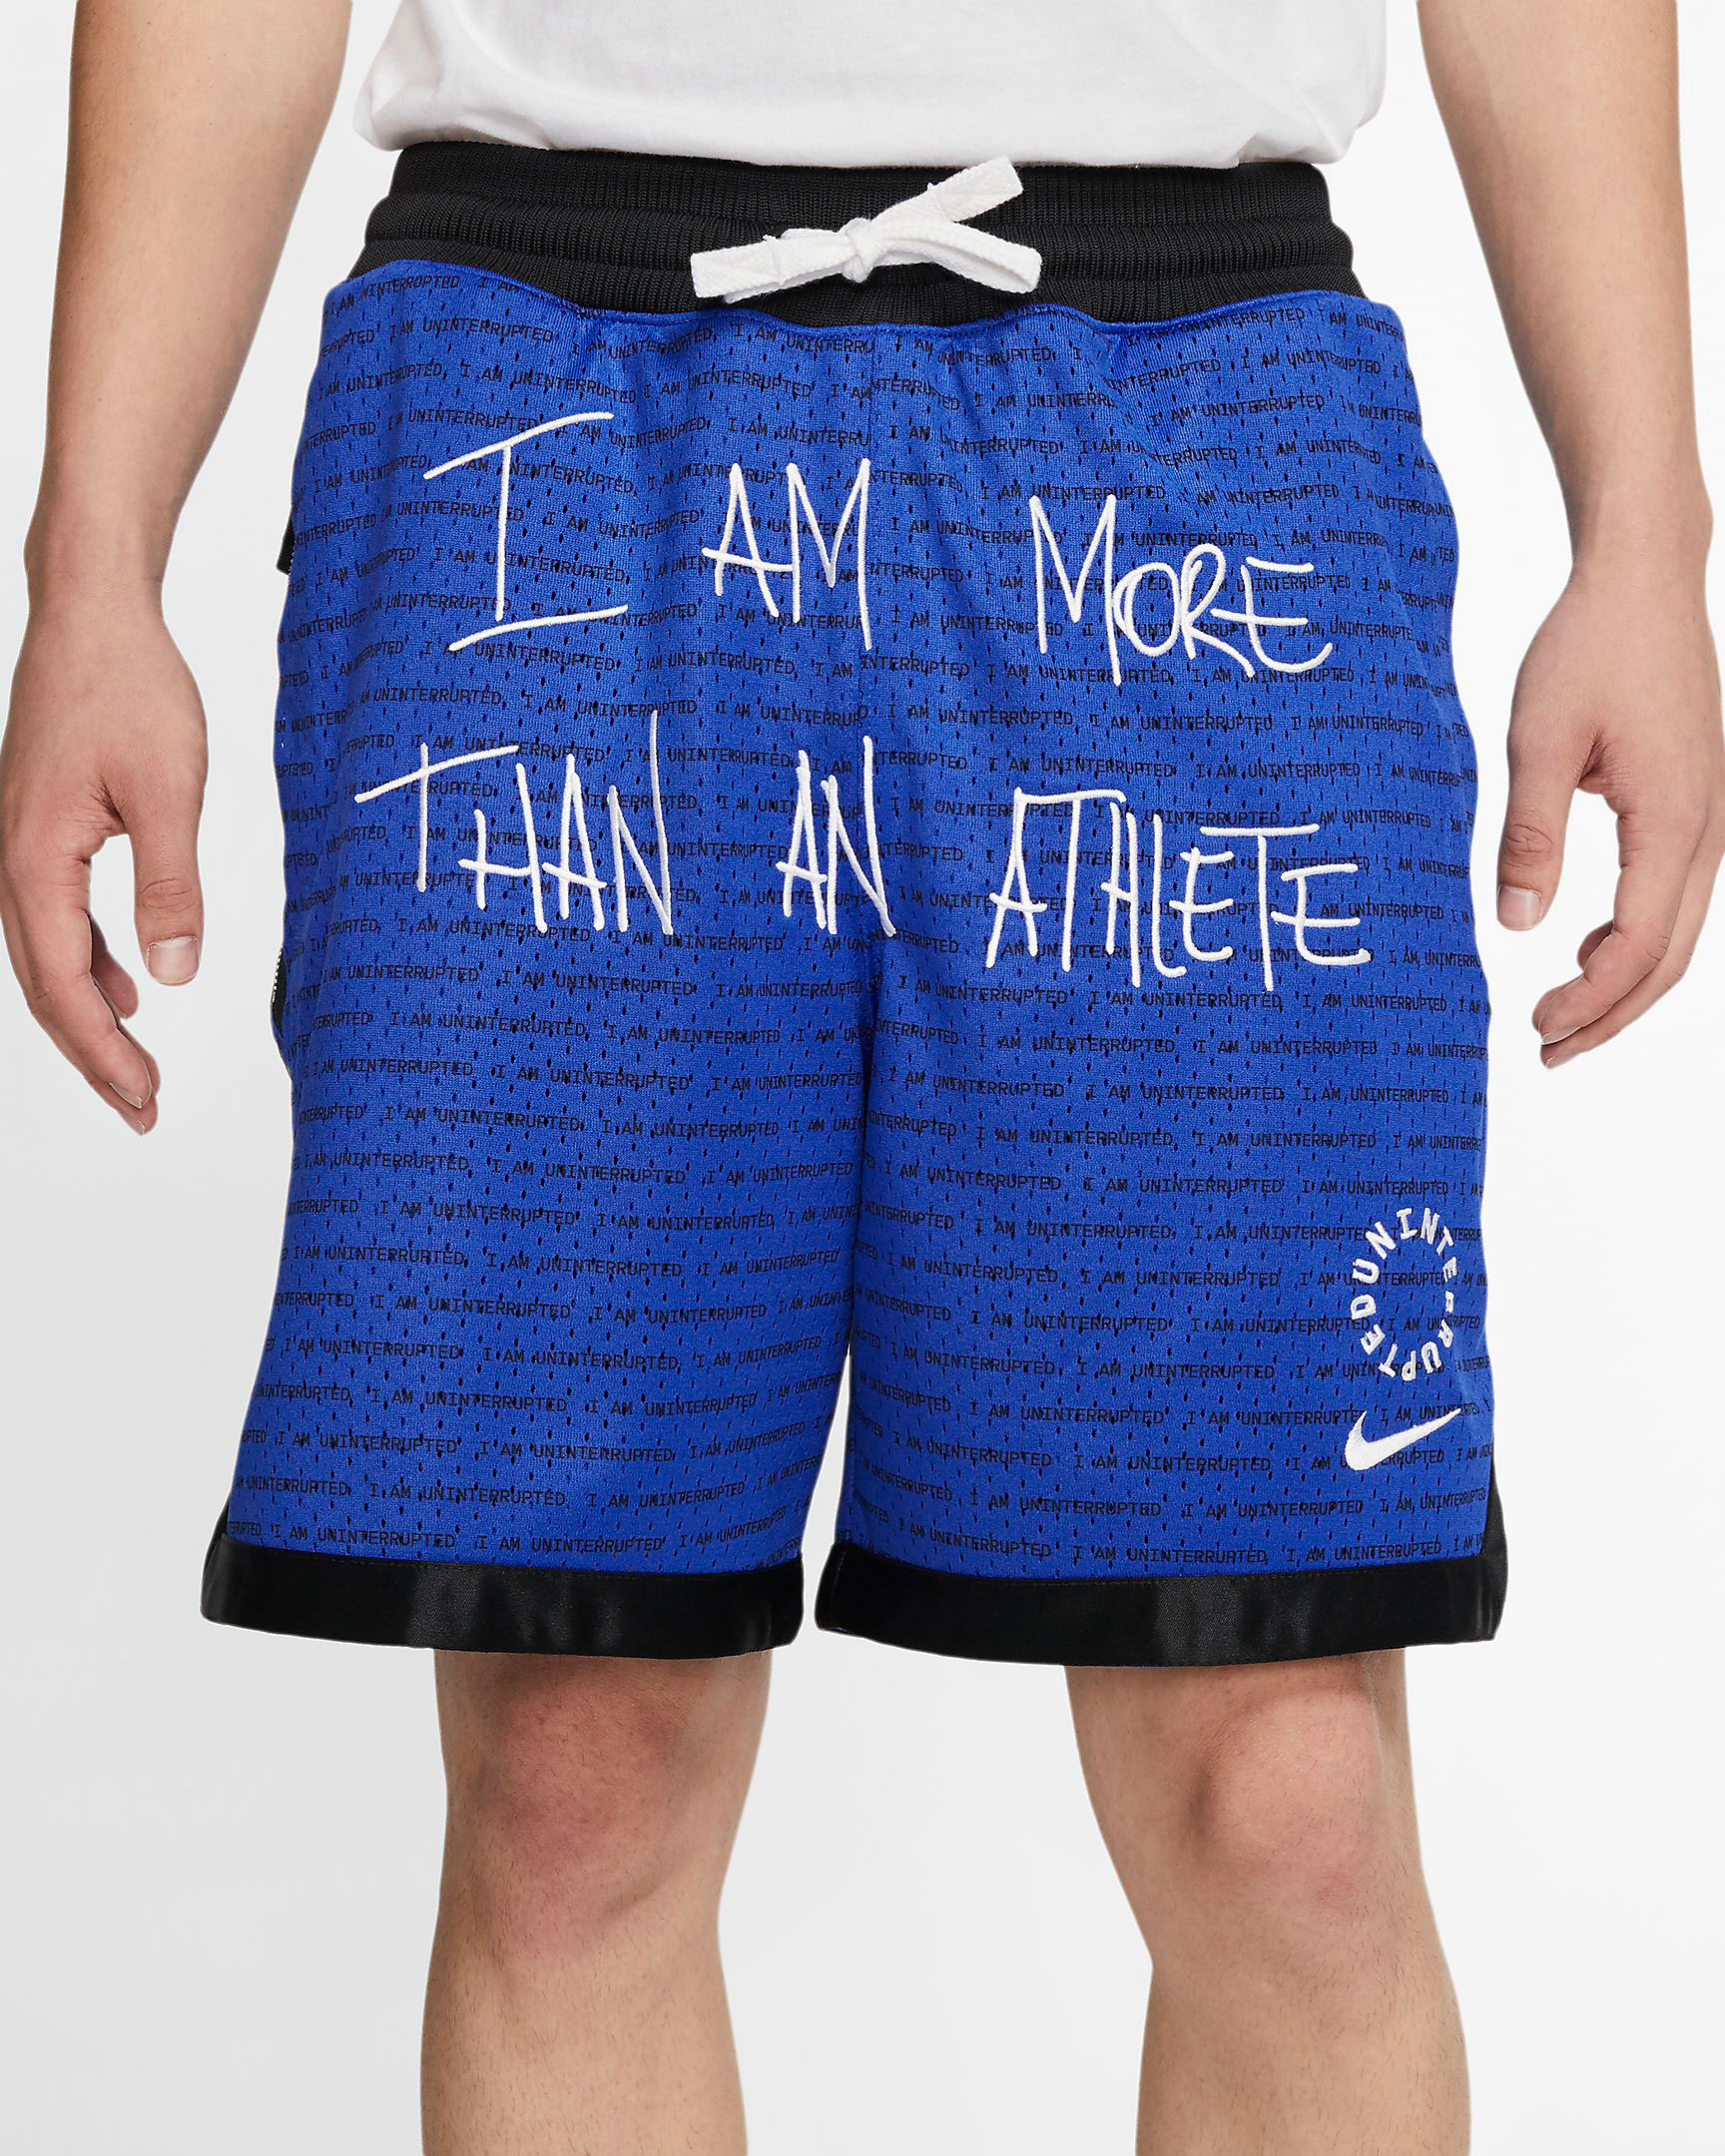 more than an athlete socks